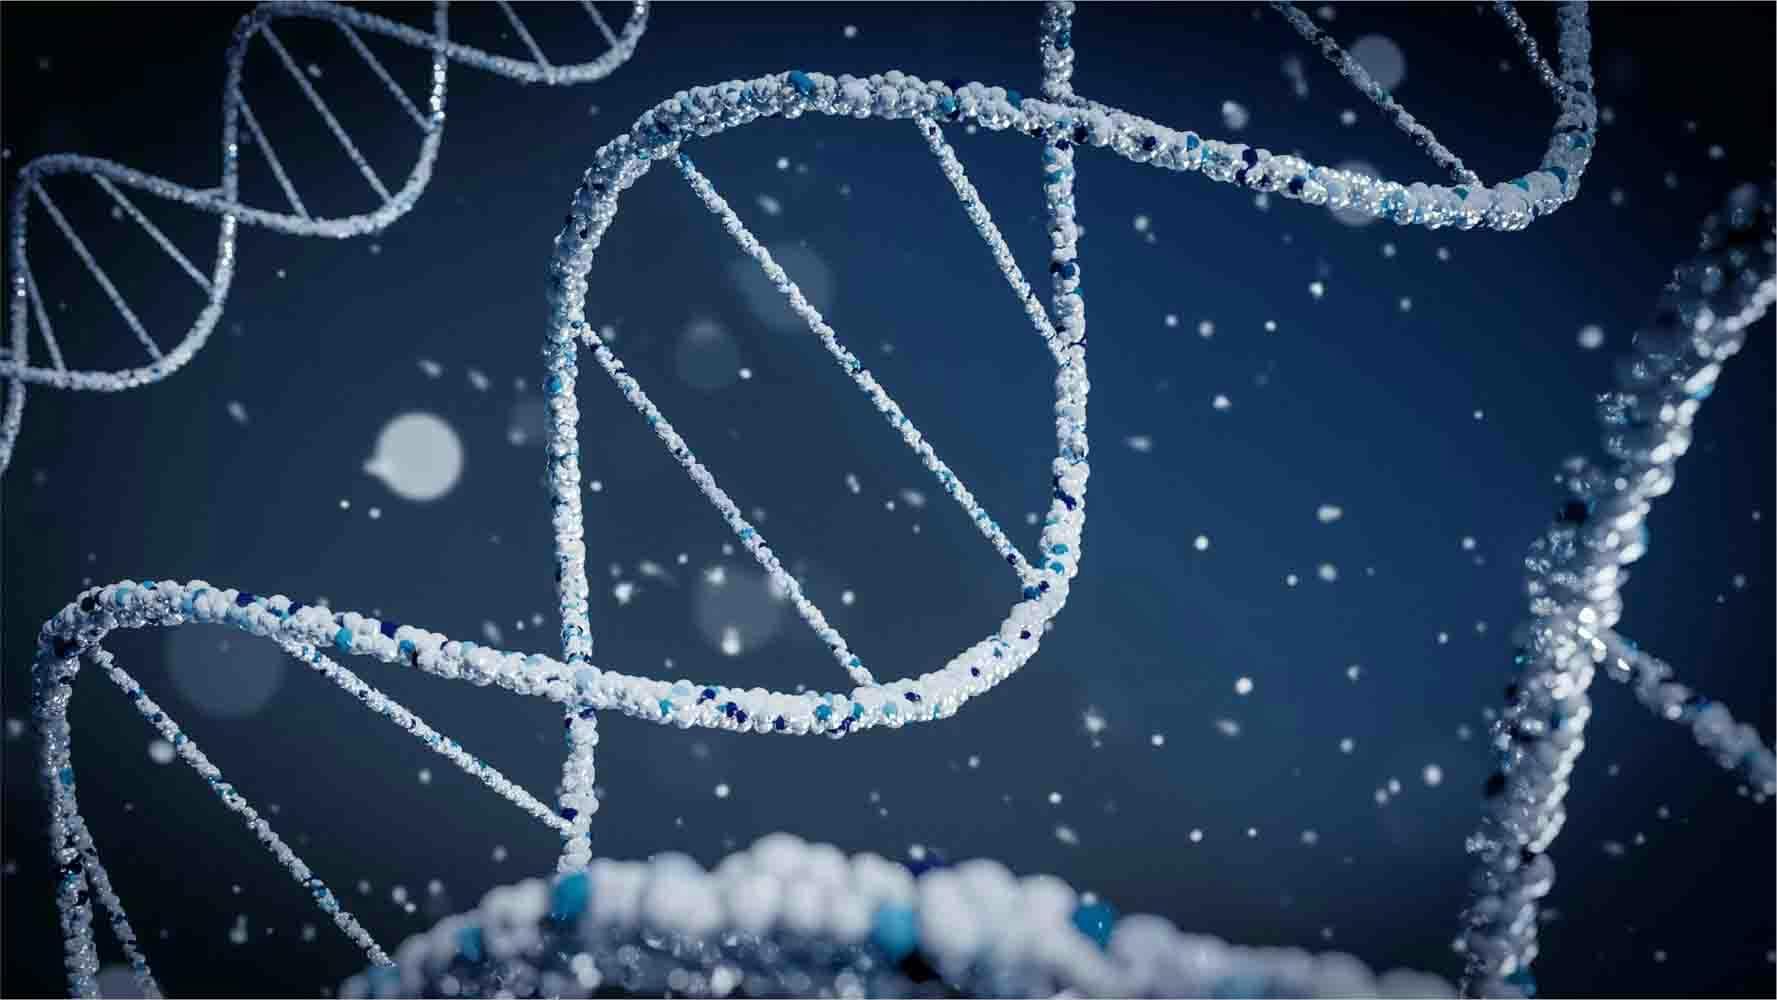 Spiral structures of DNA molecule on dark blue abstract background